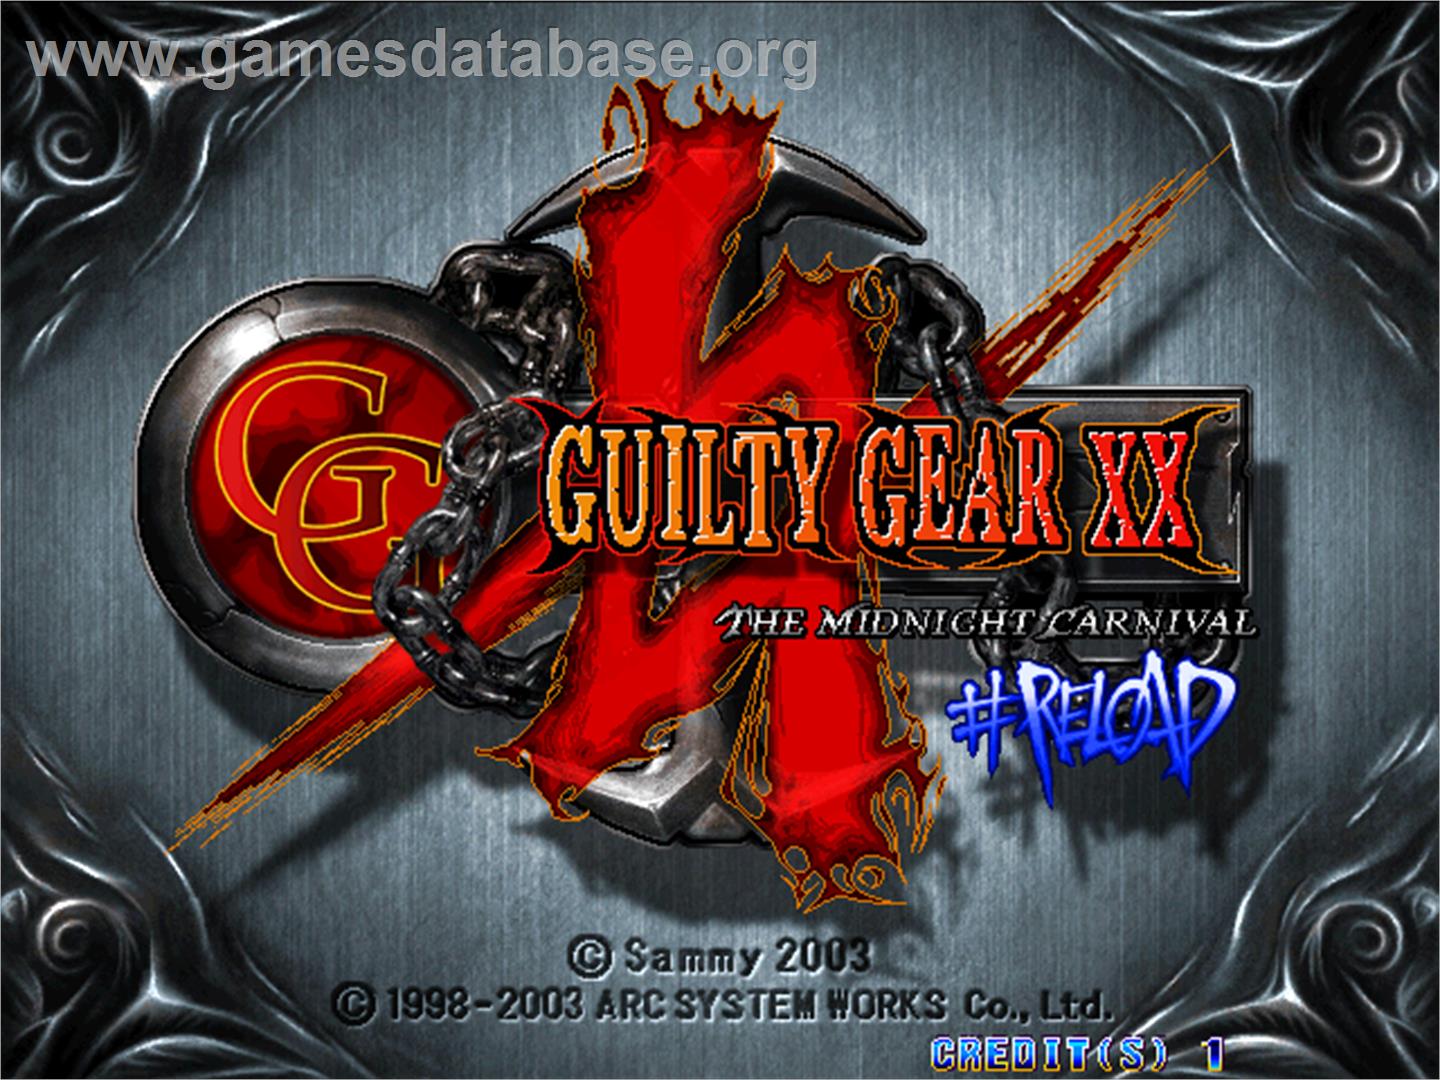 Guilty Gear XX #Reload - Arcade - Artwork - Title Screen